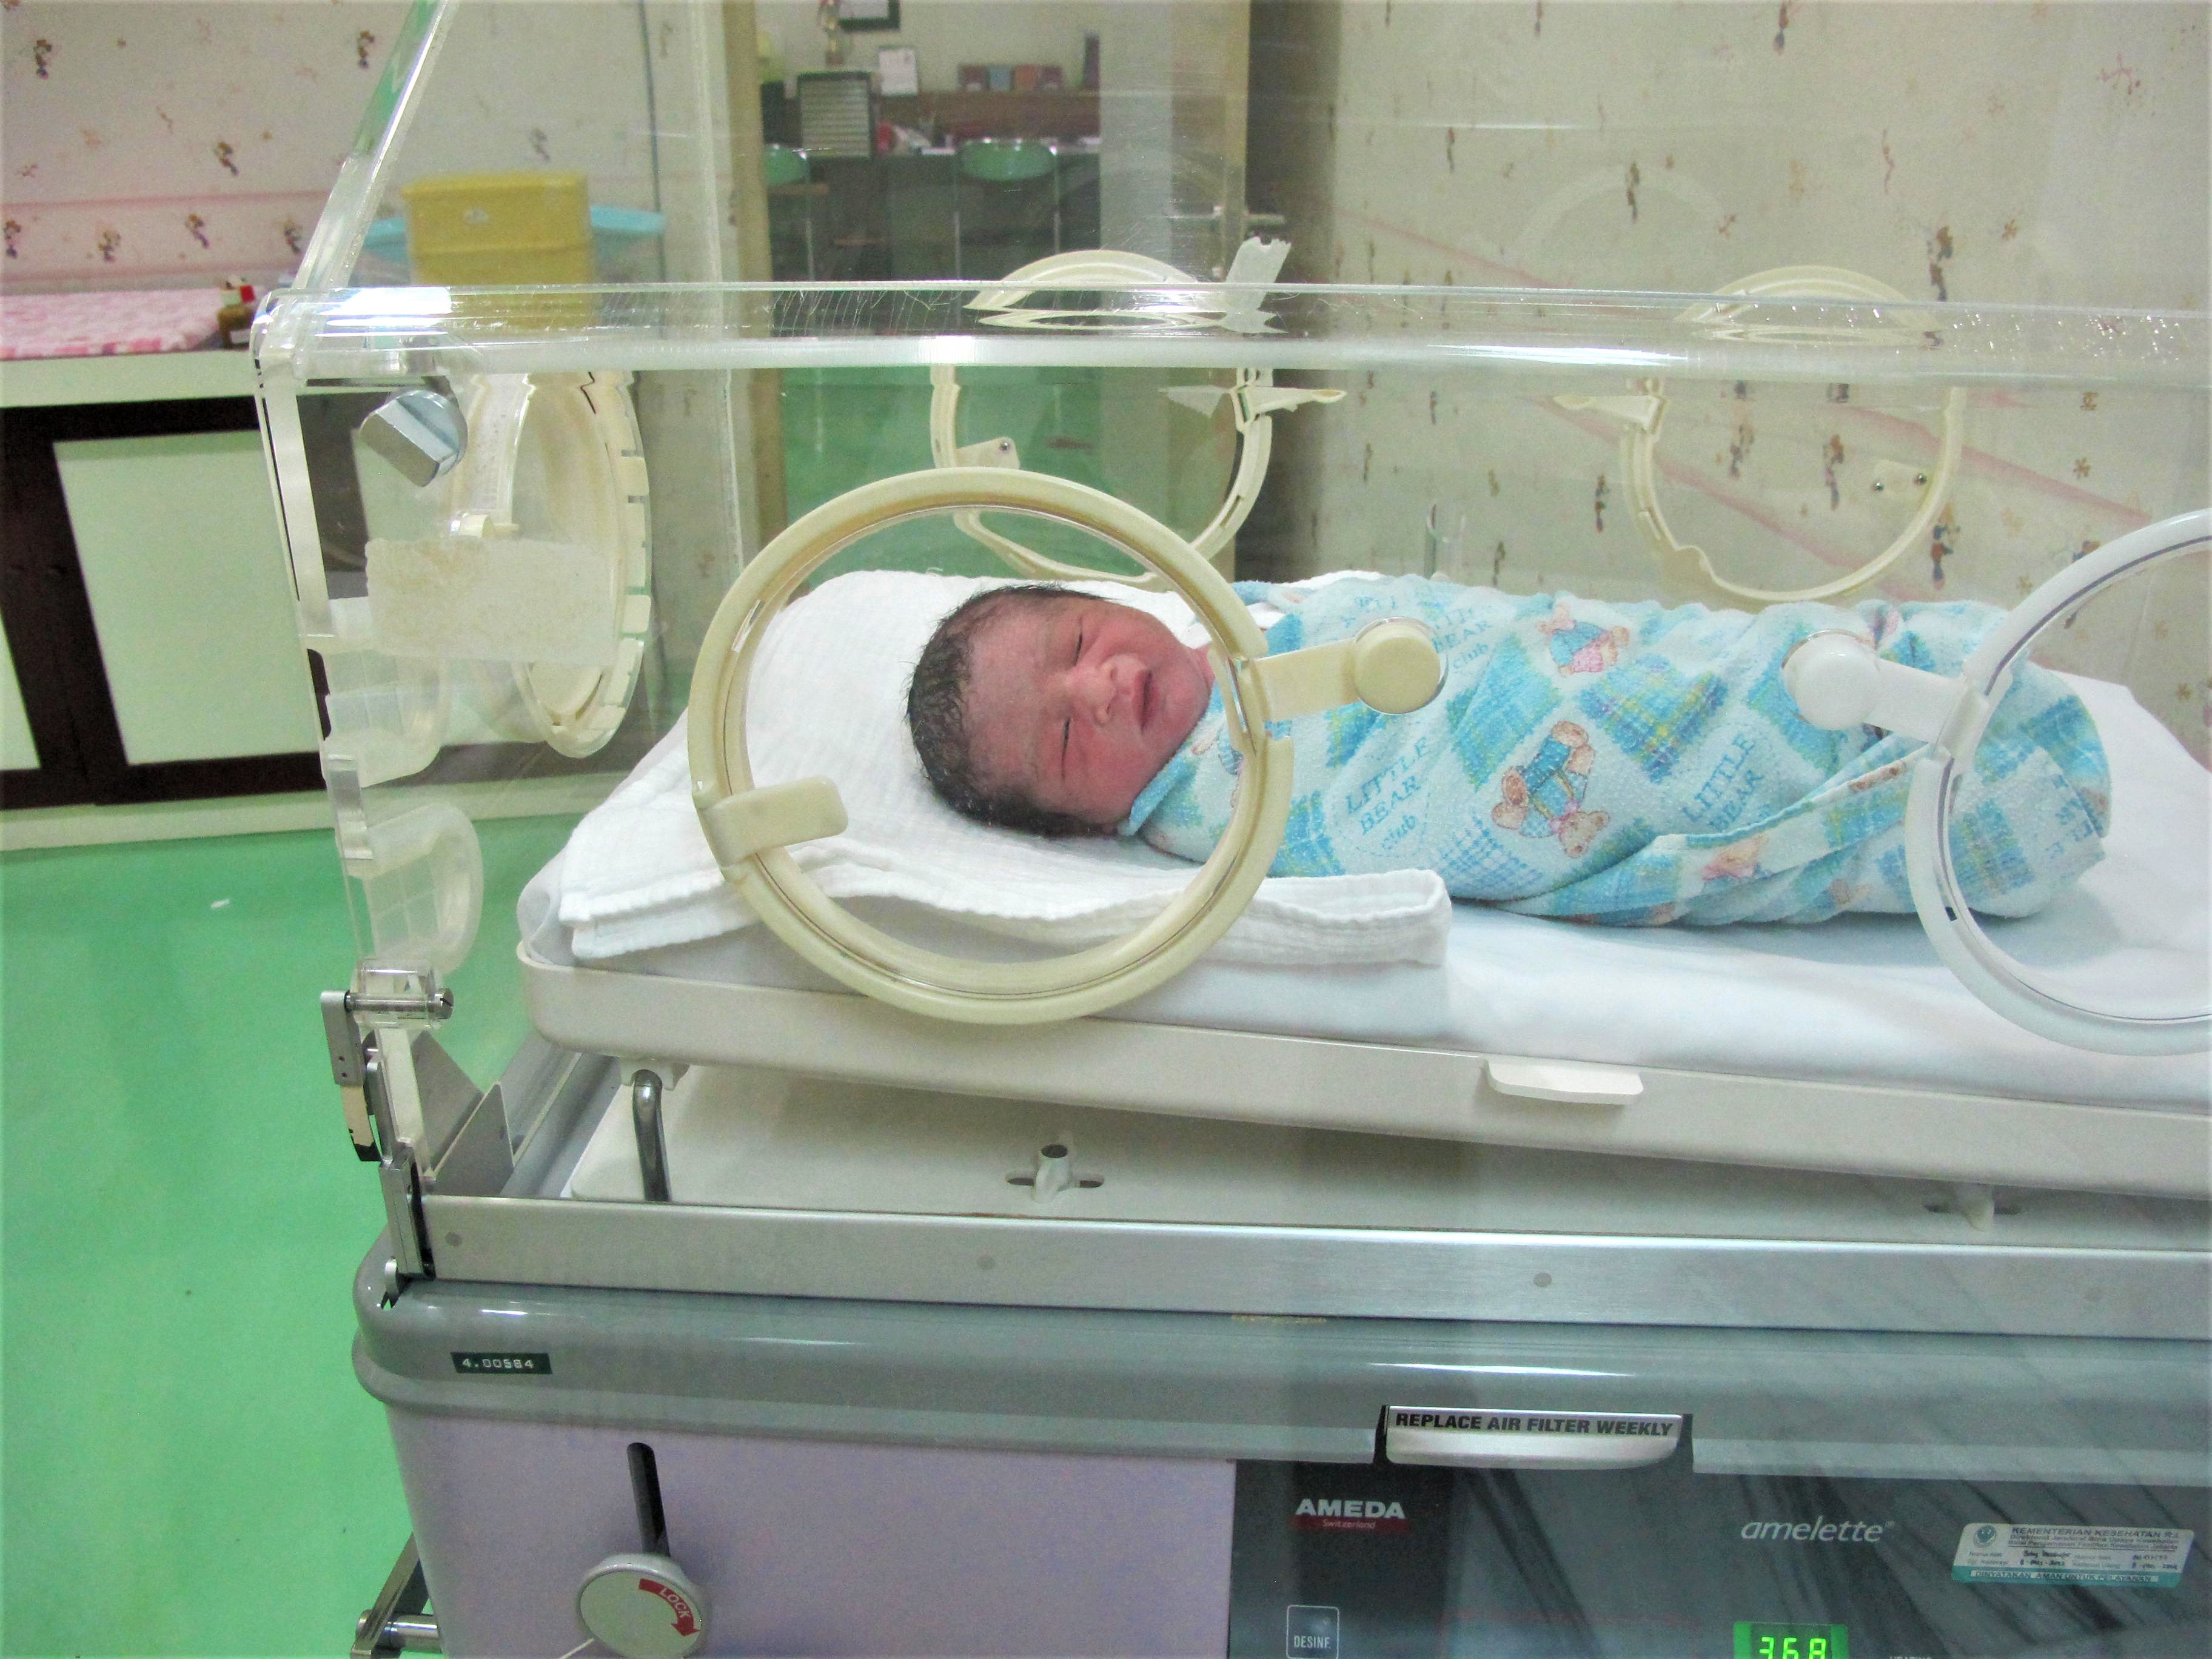 Infant Methemoglobinemia (Blue Baby Syndrome)